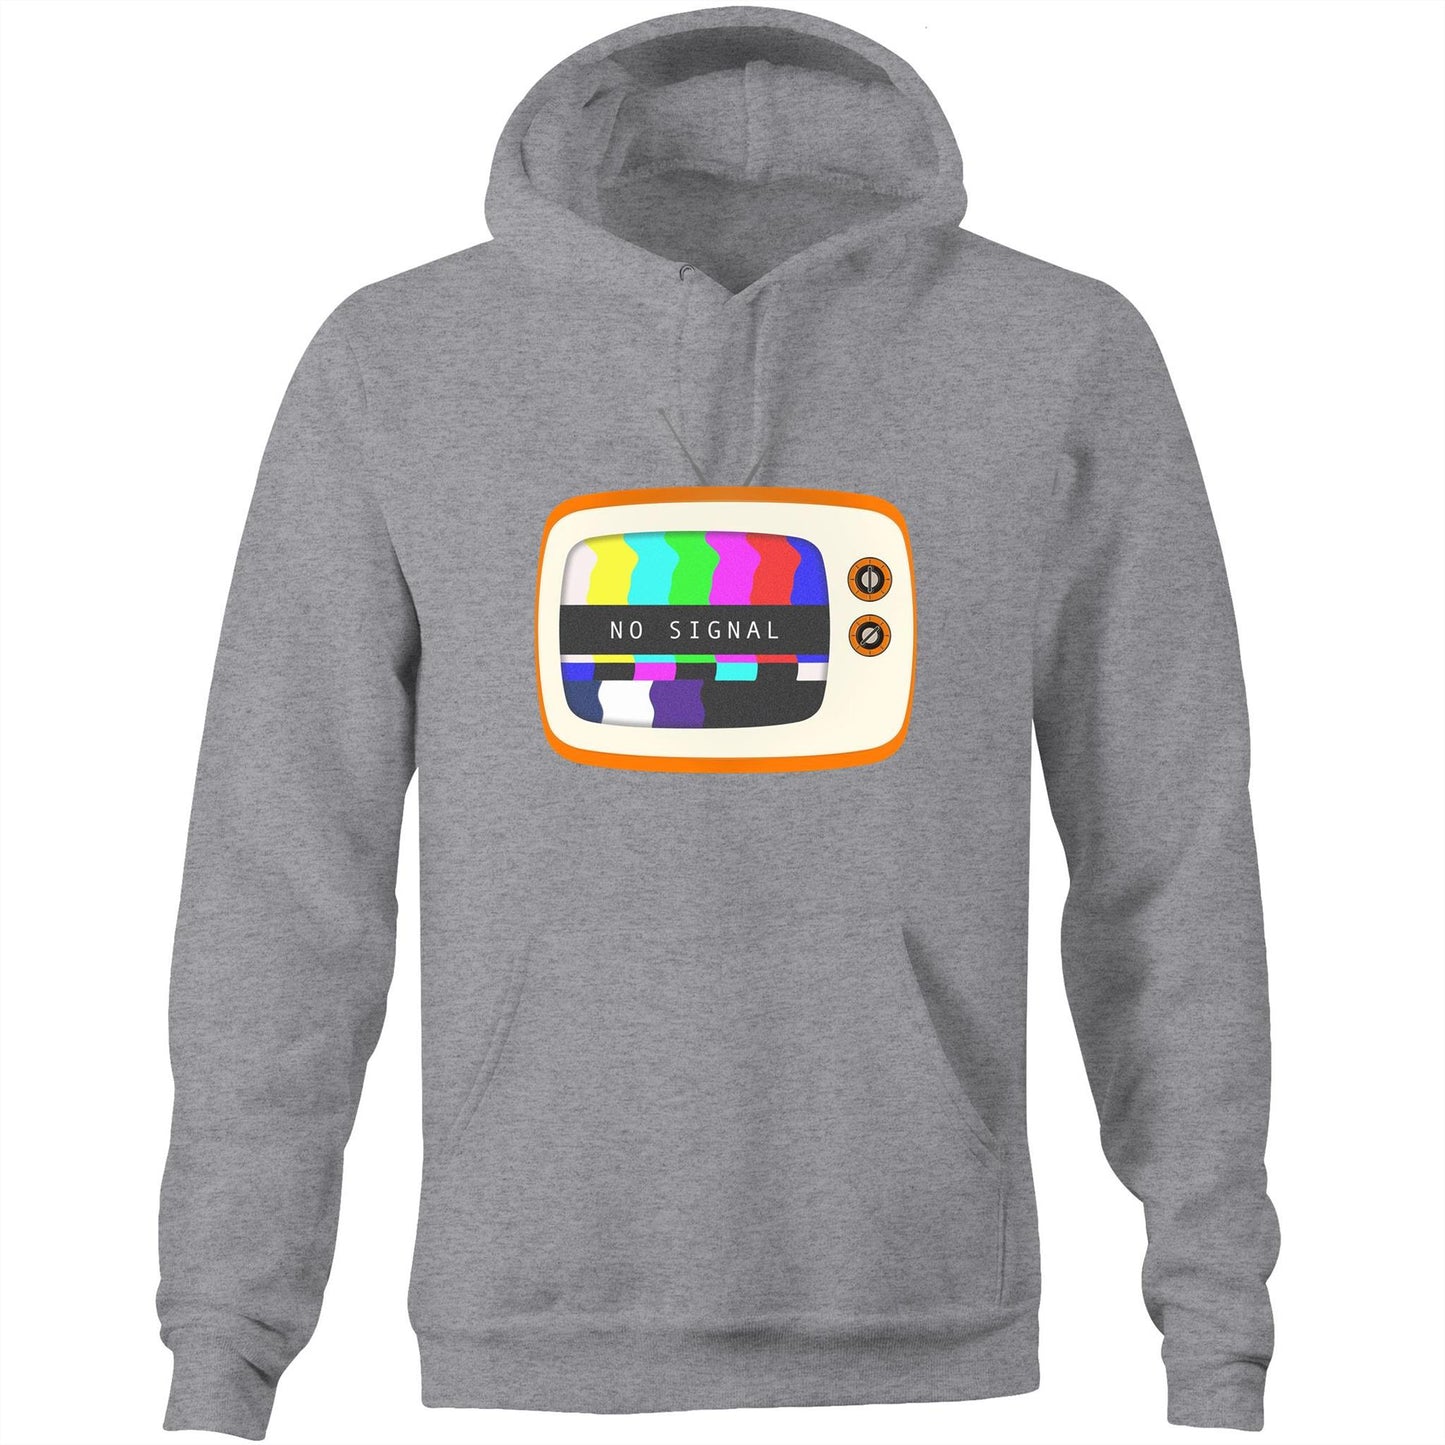 Retro Television, No Signal - Pocket Hoodie Sweatshirt Grey Marle Hoodie Retro